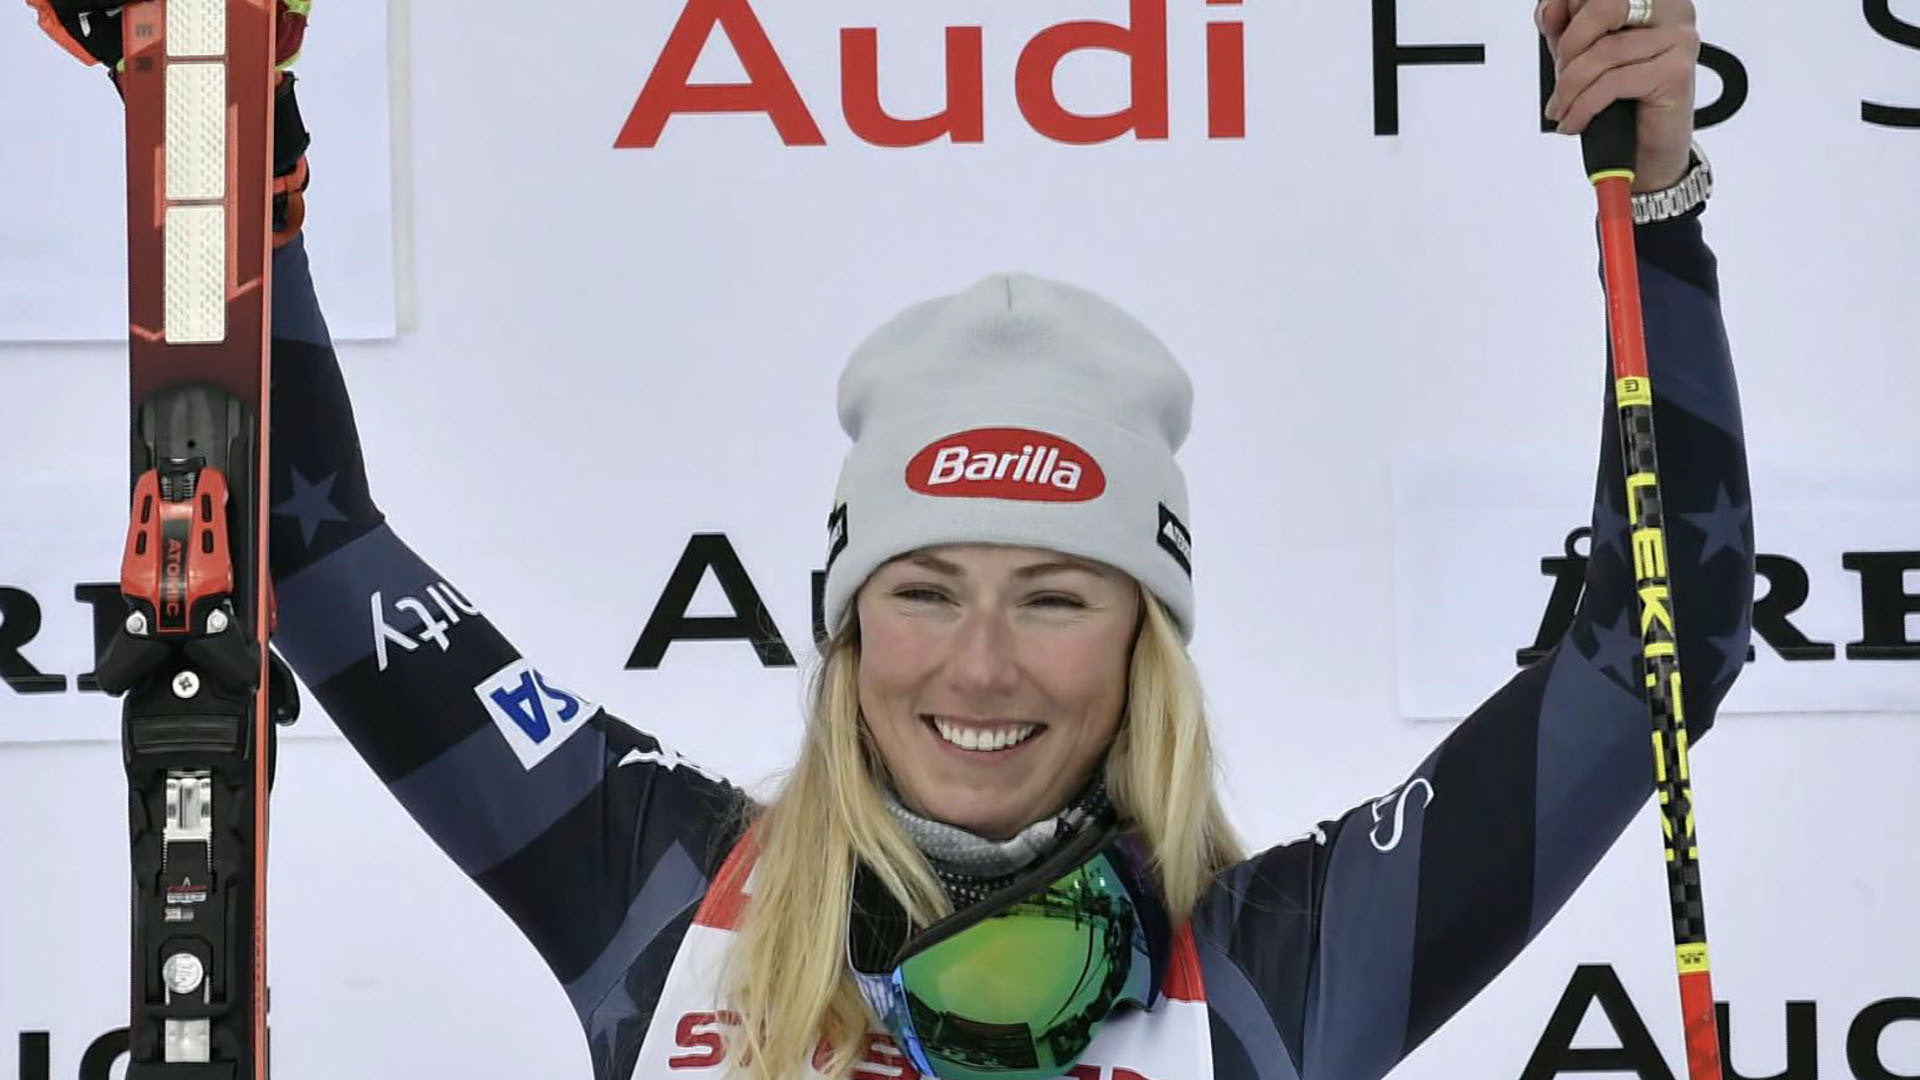 Watch CBS Evening News Mikaela Shiffrin sets World Cup skiing record